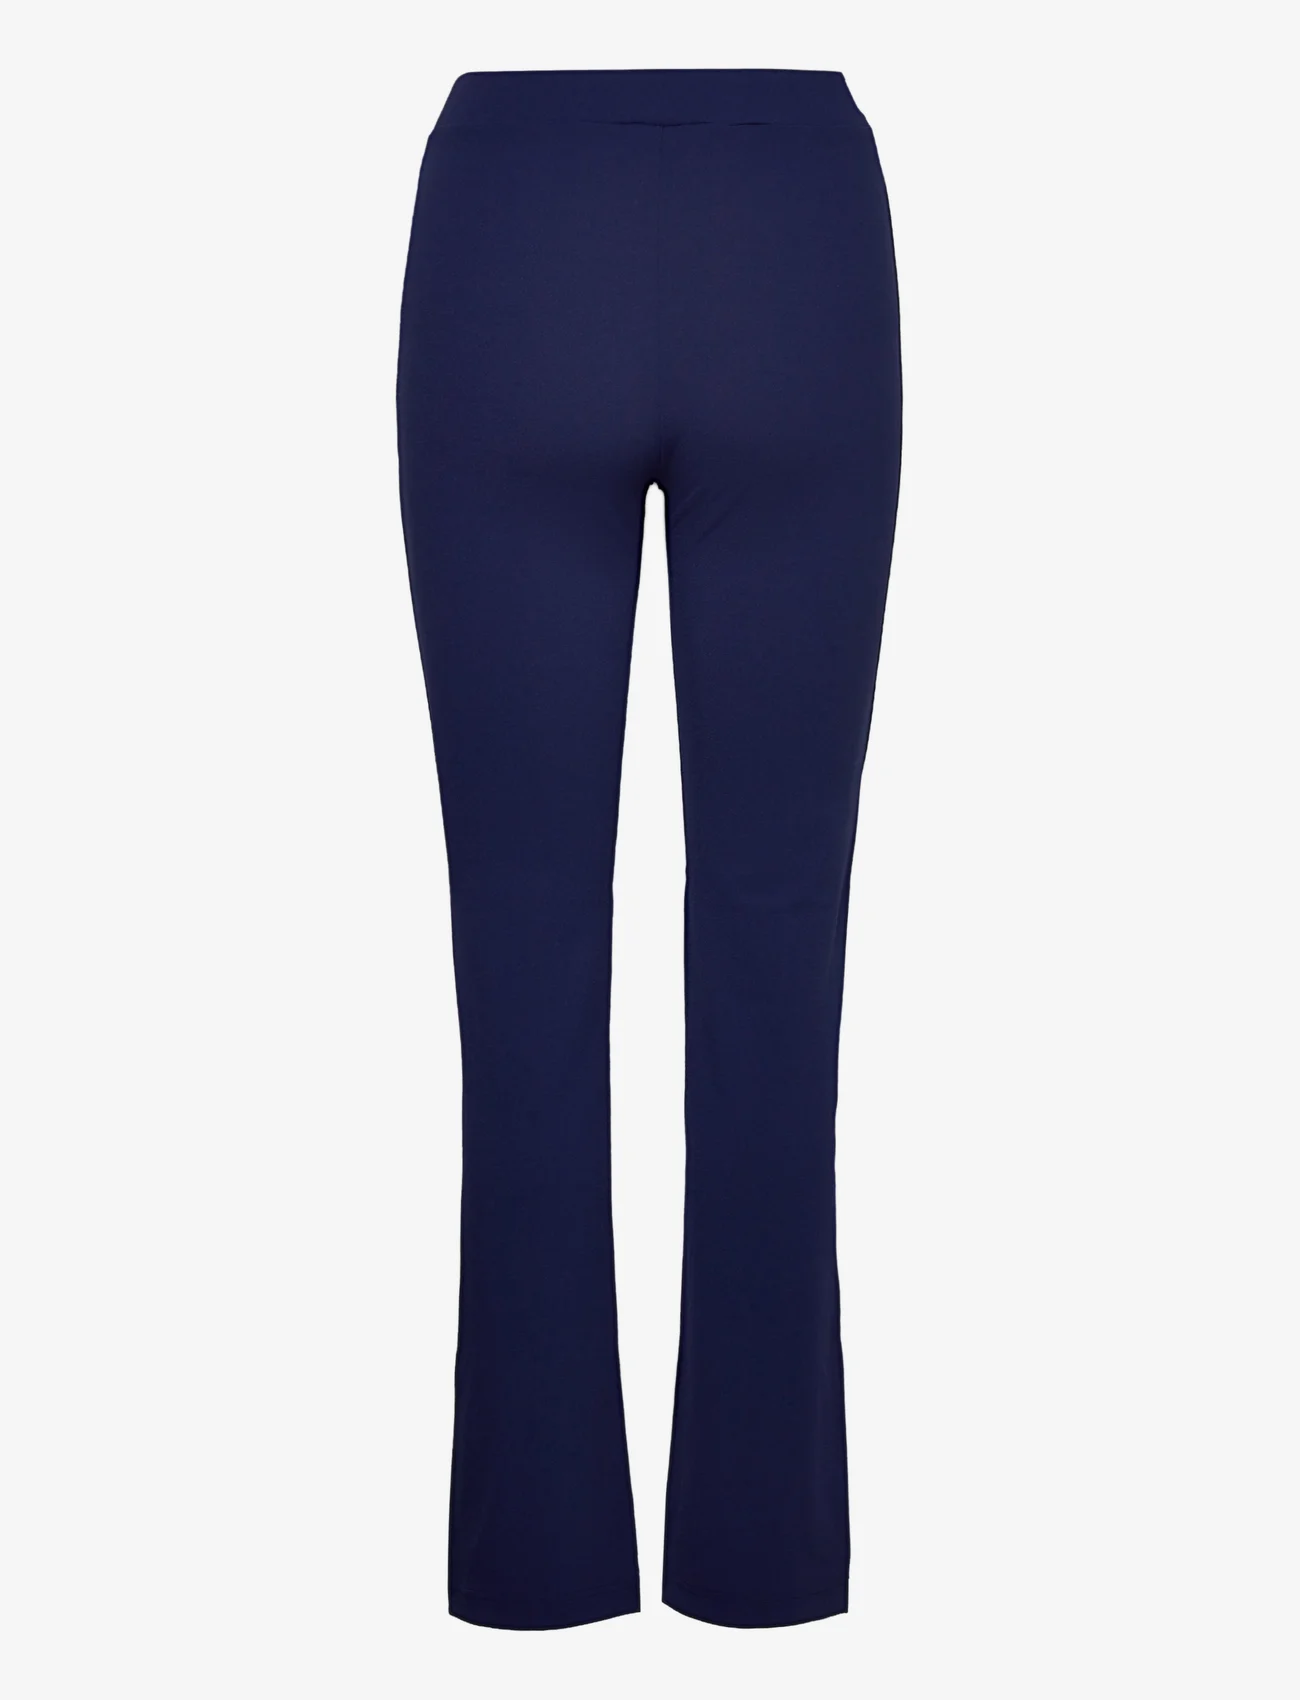 FILA - TRANI flare pants with slit - spodnie sportowe - medieval blue - 1